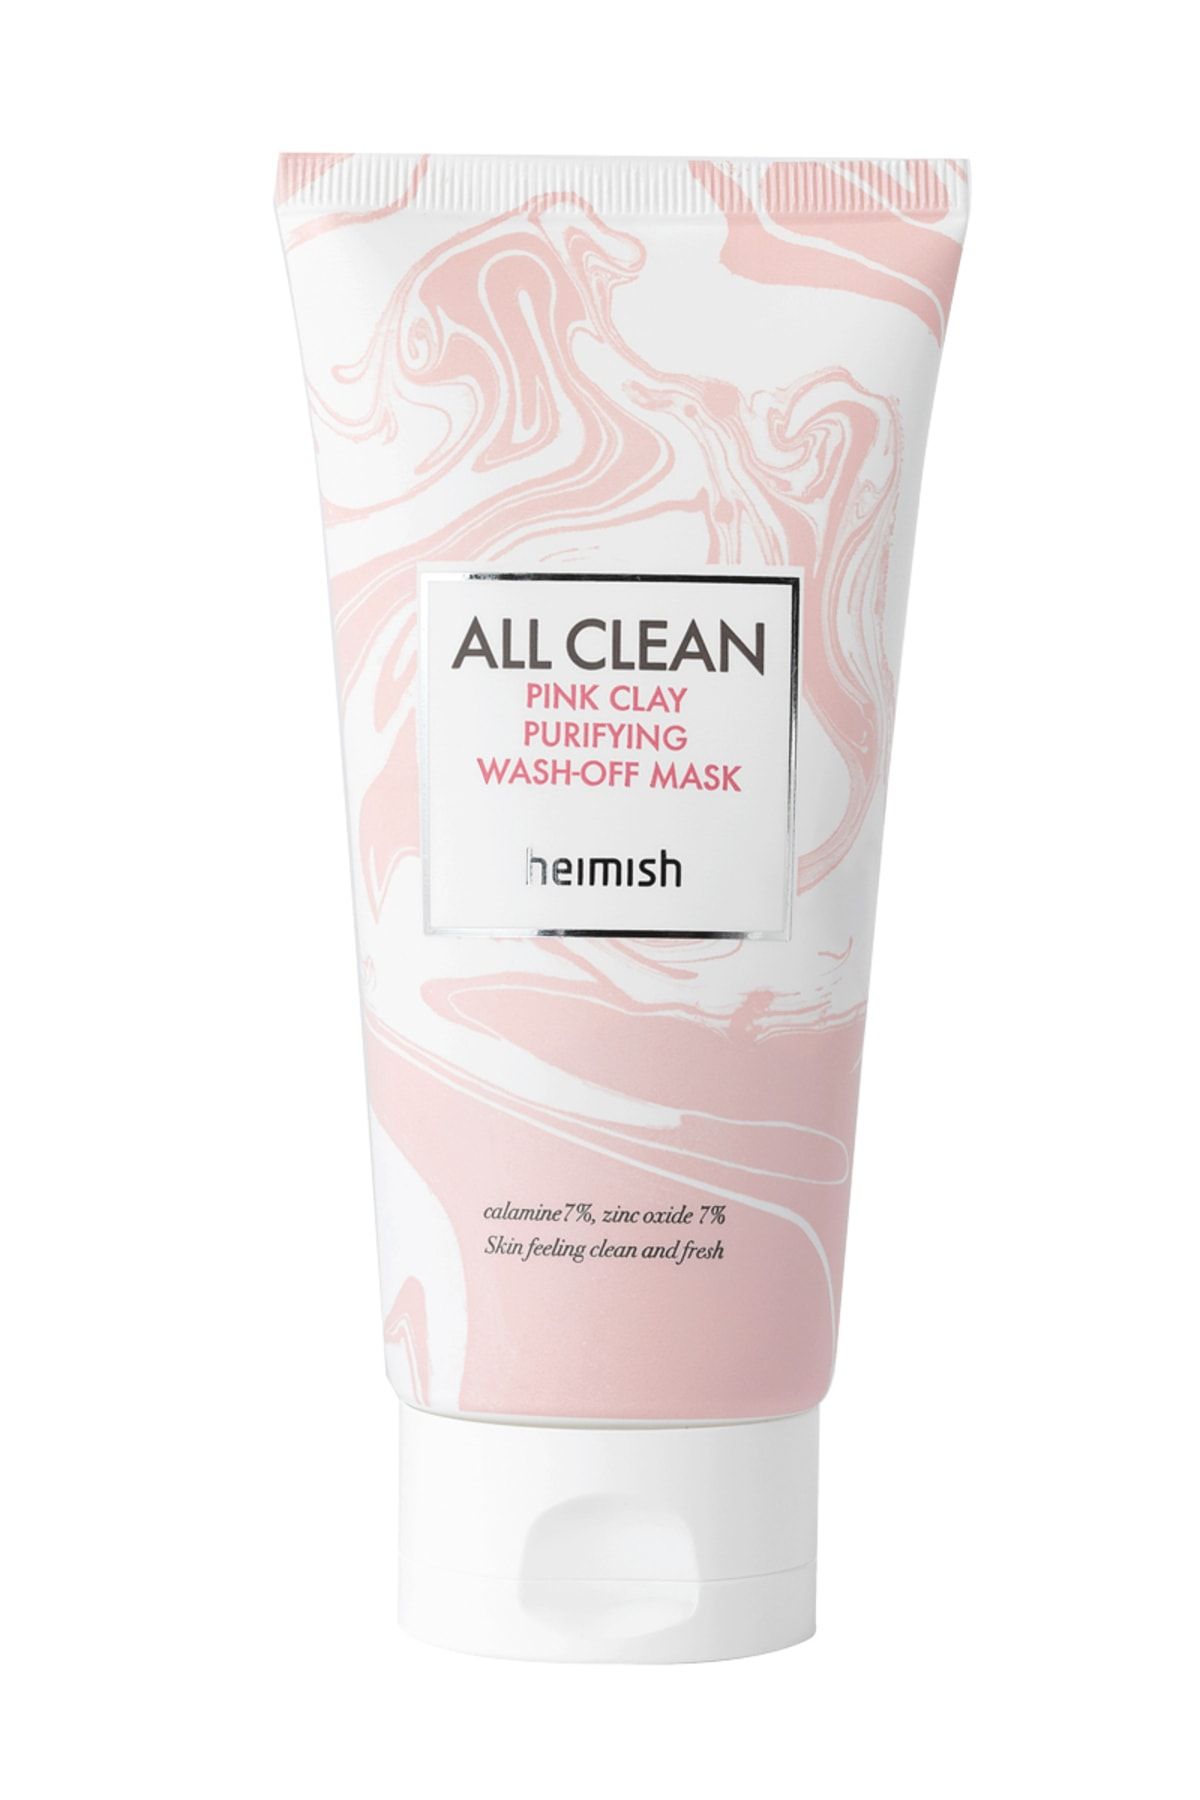 Heimish All Clean Pink Clay Purifying Wash Off Mask - Pembe Kil Maskesi